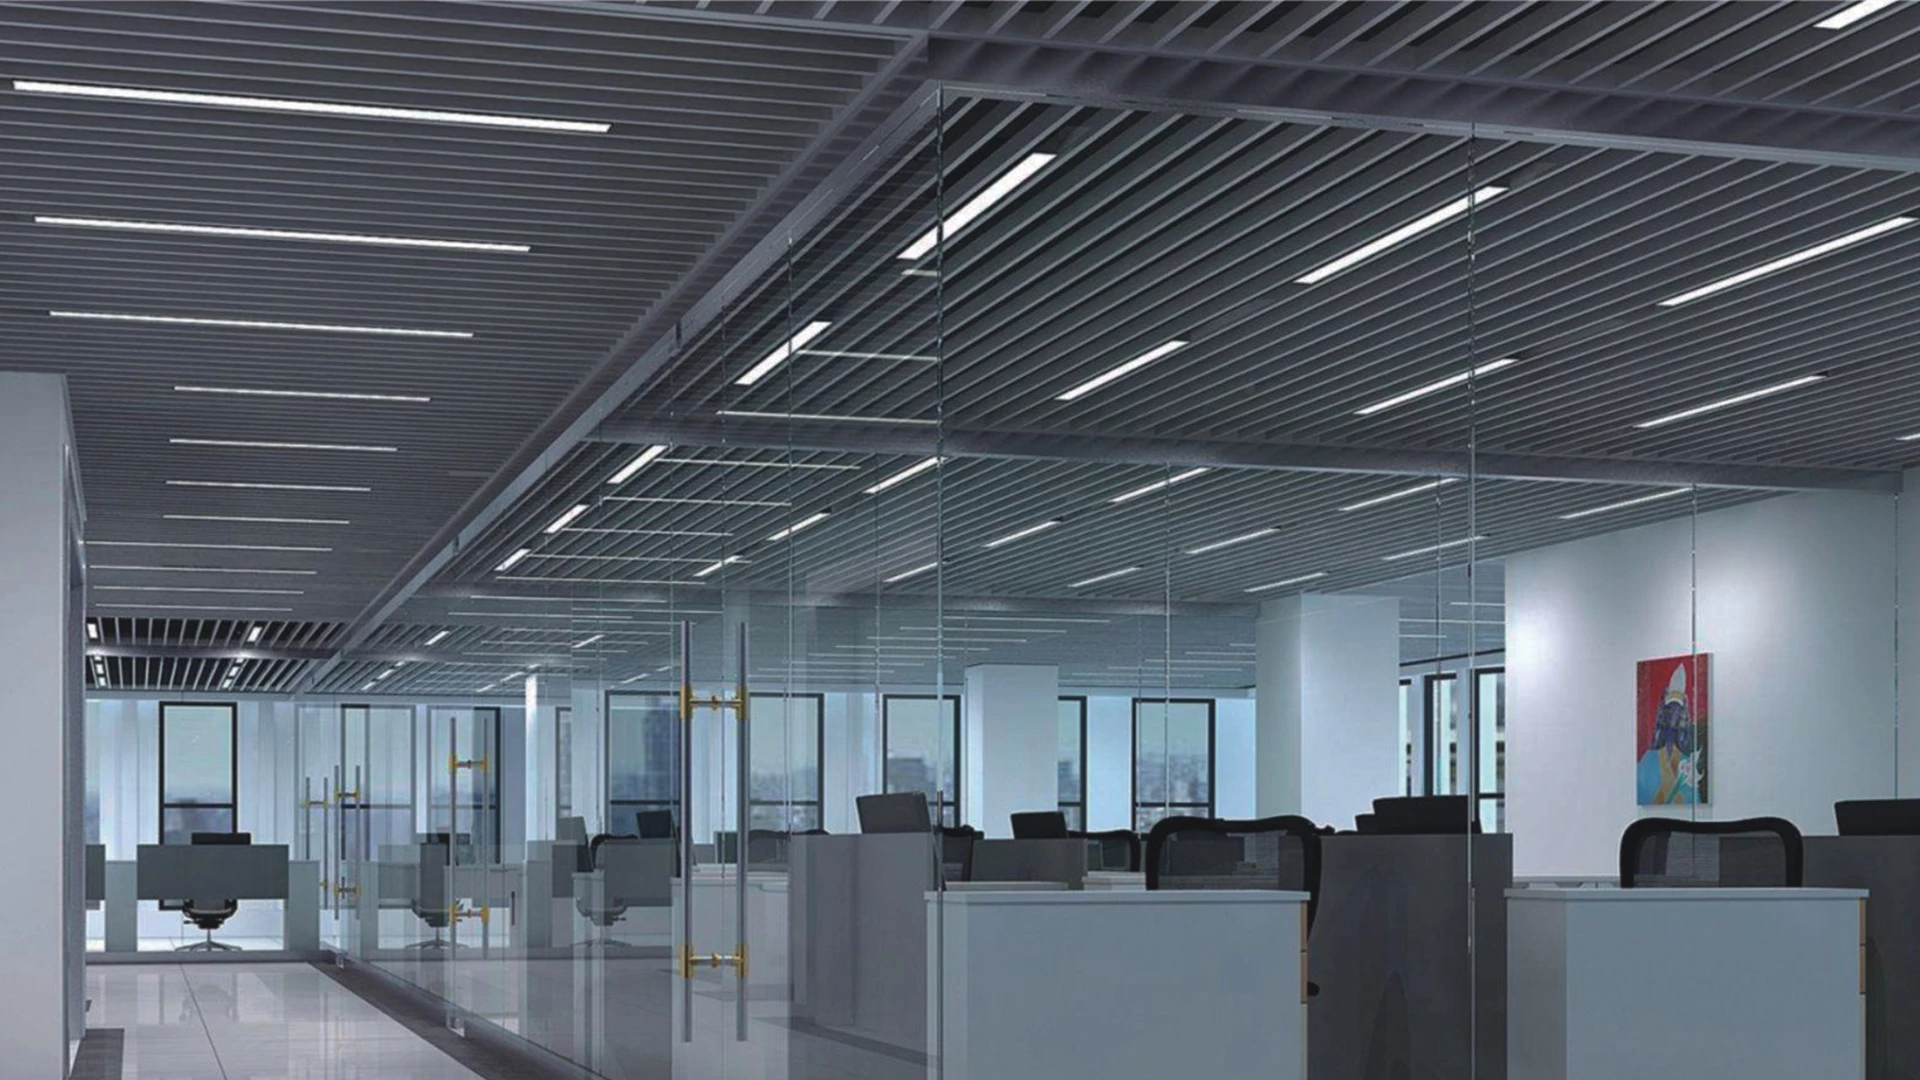 LED linear light maximizes interior space